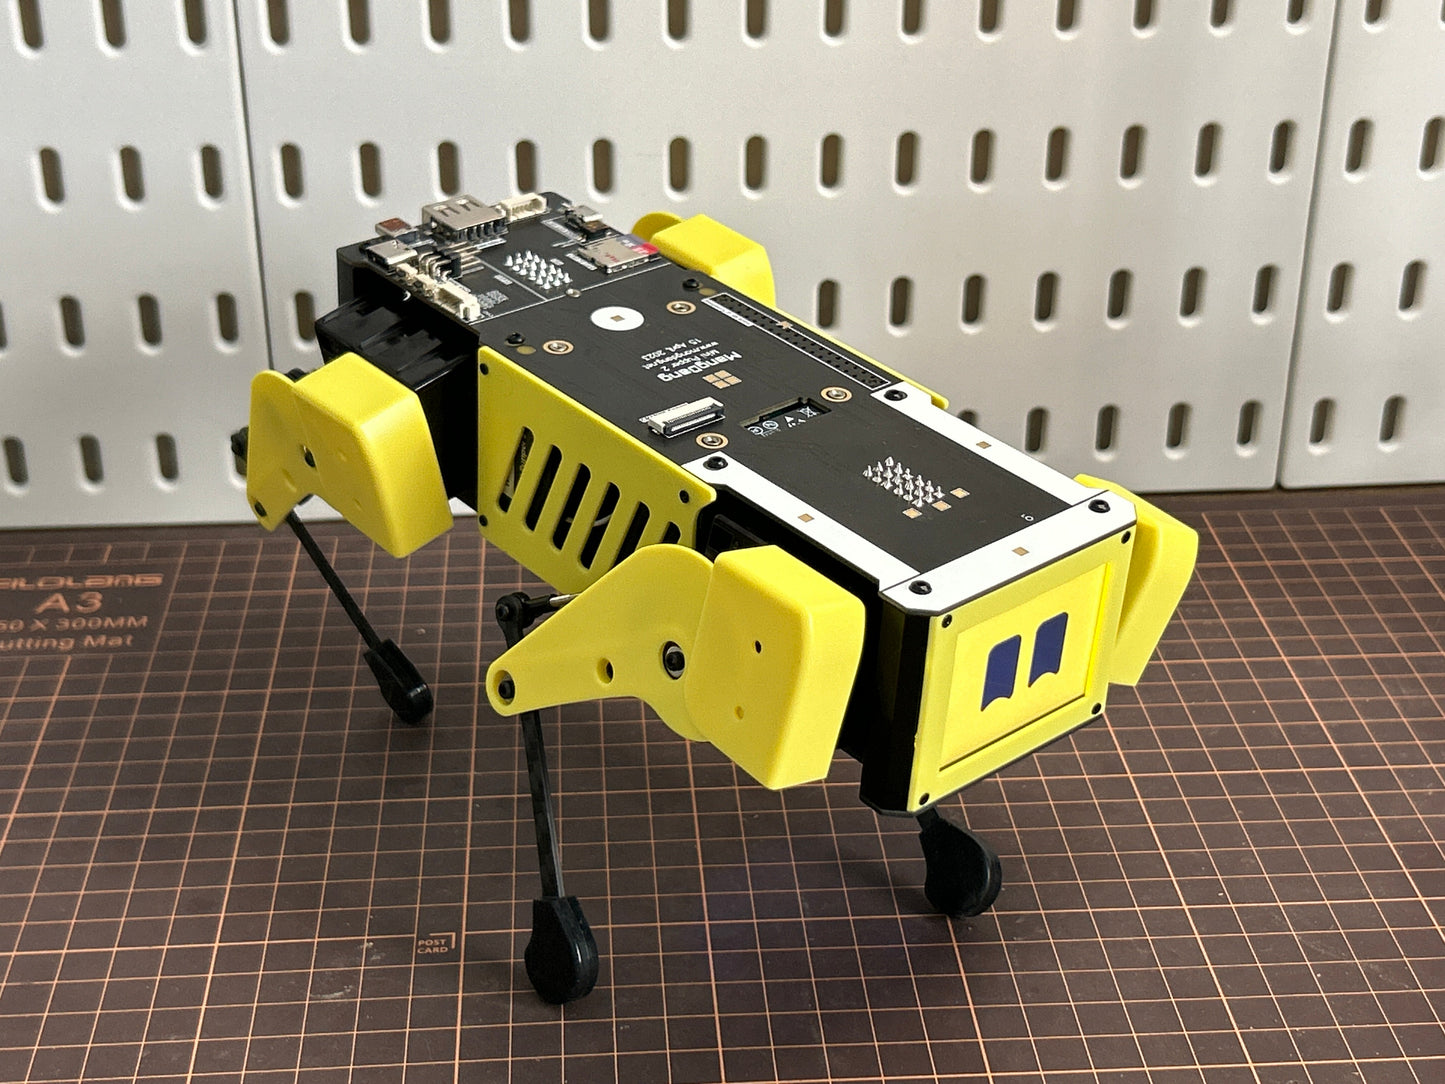 Mini Pupper 2 Pro Maker Kit: AI Quadruped Robot, Robot